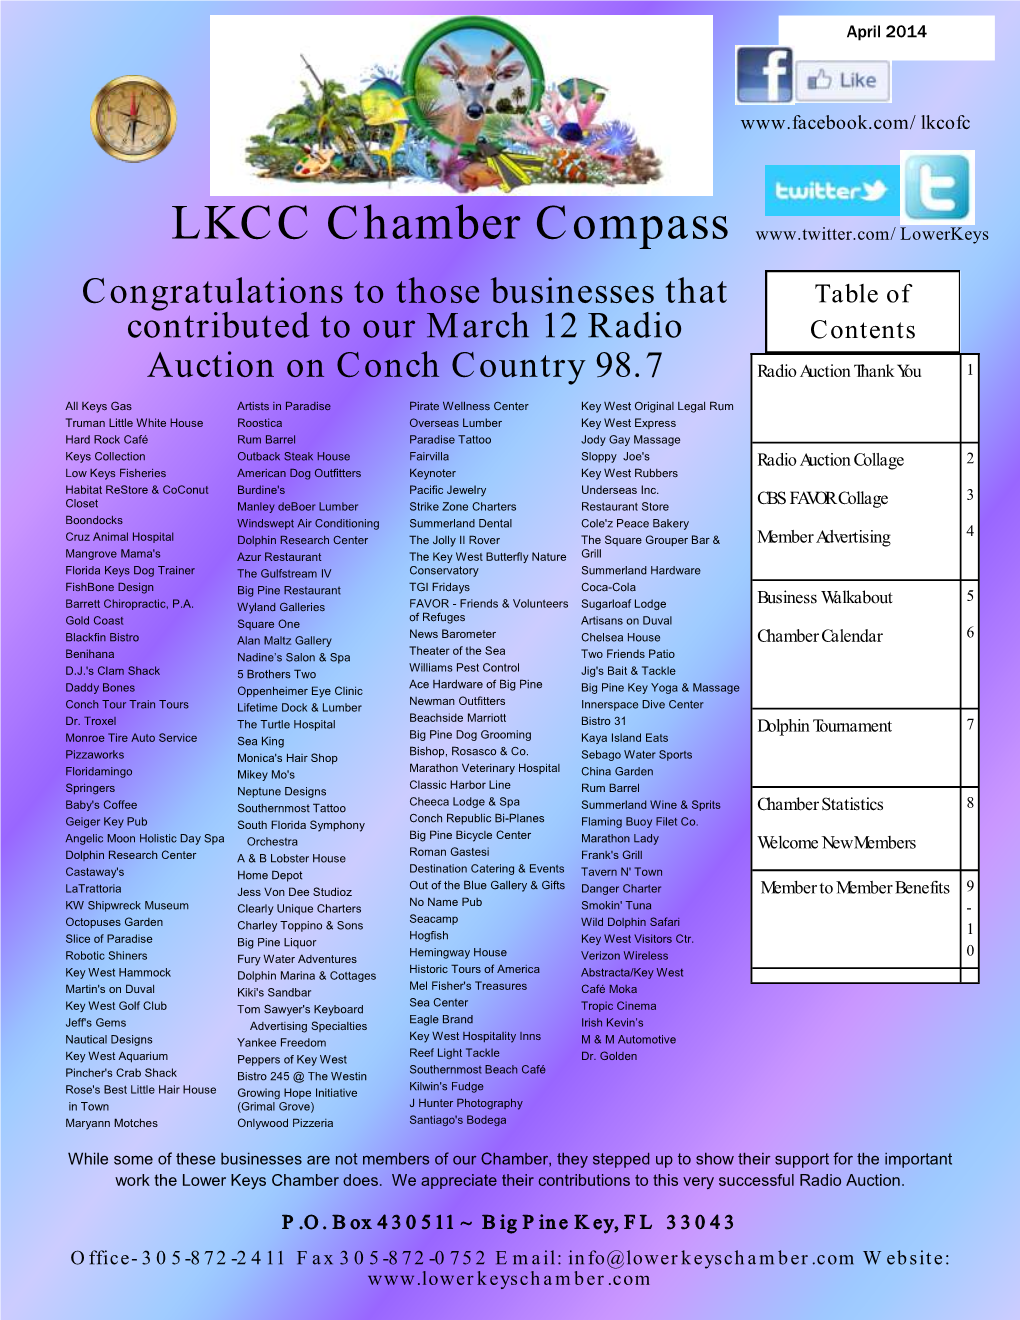 LKCC Chamber Compass